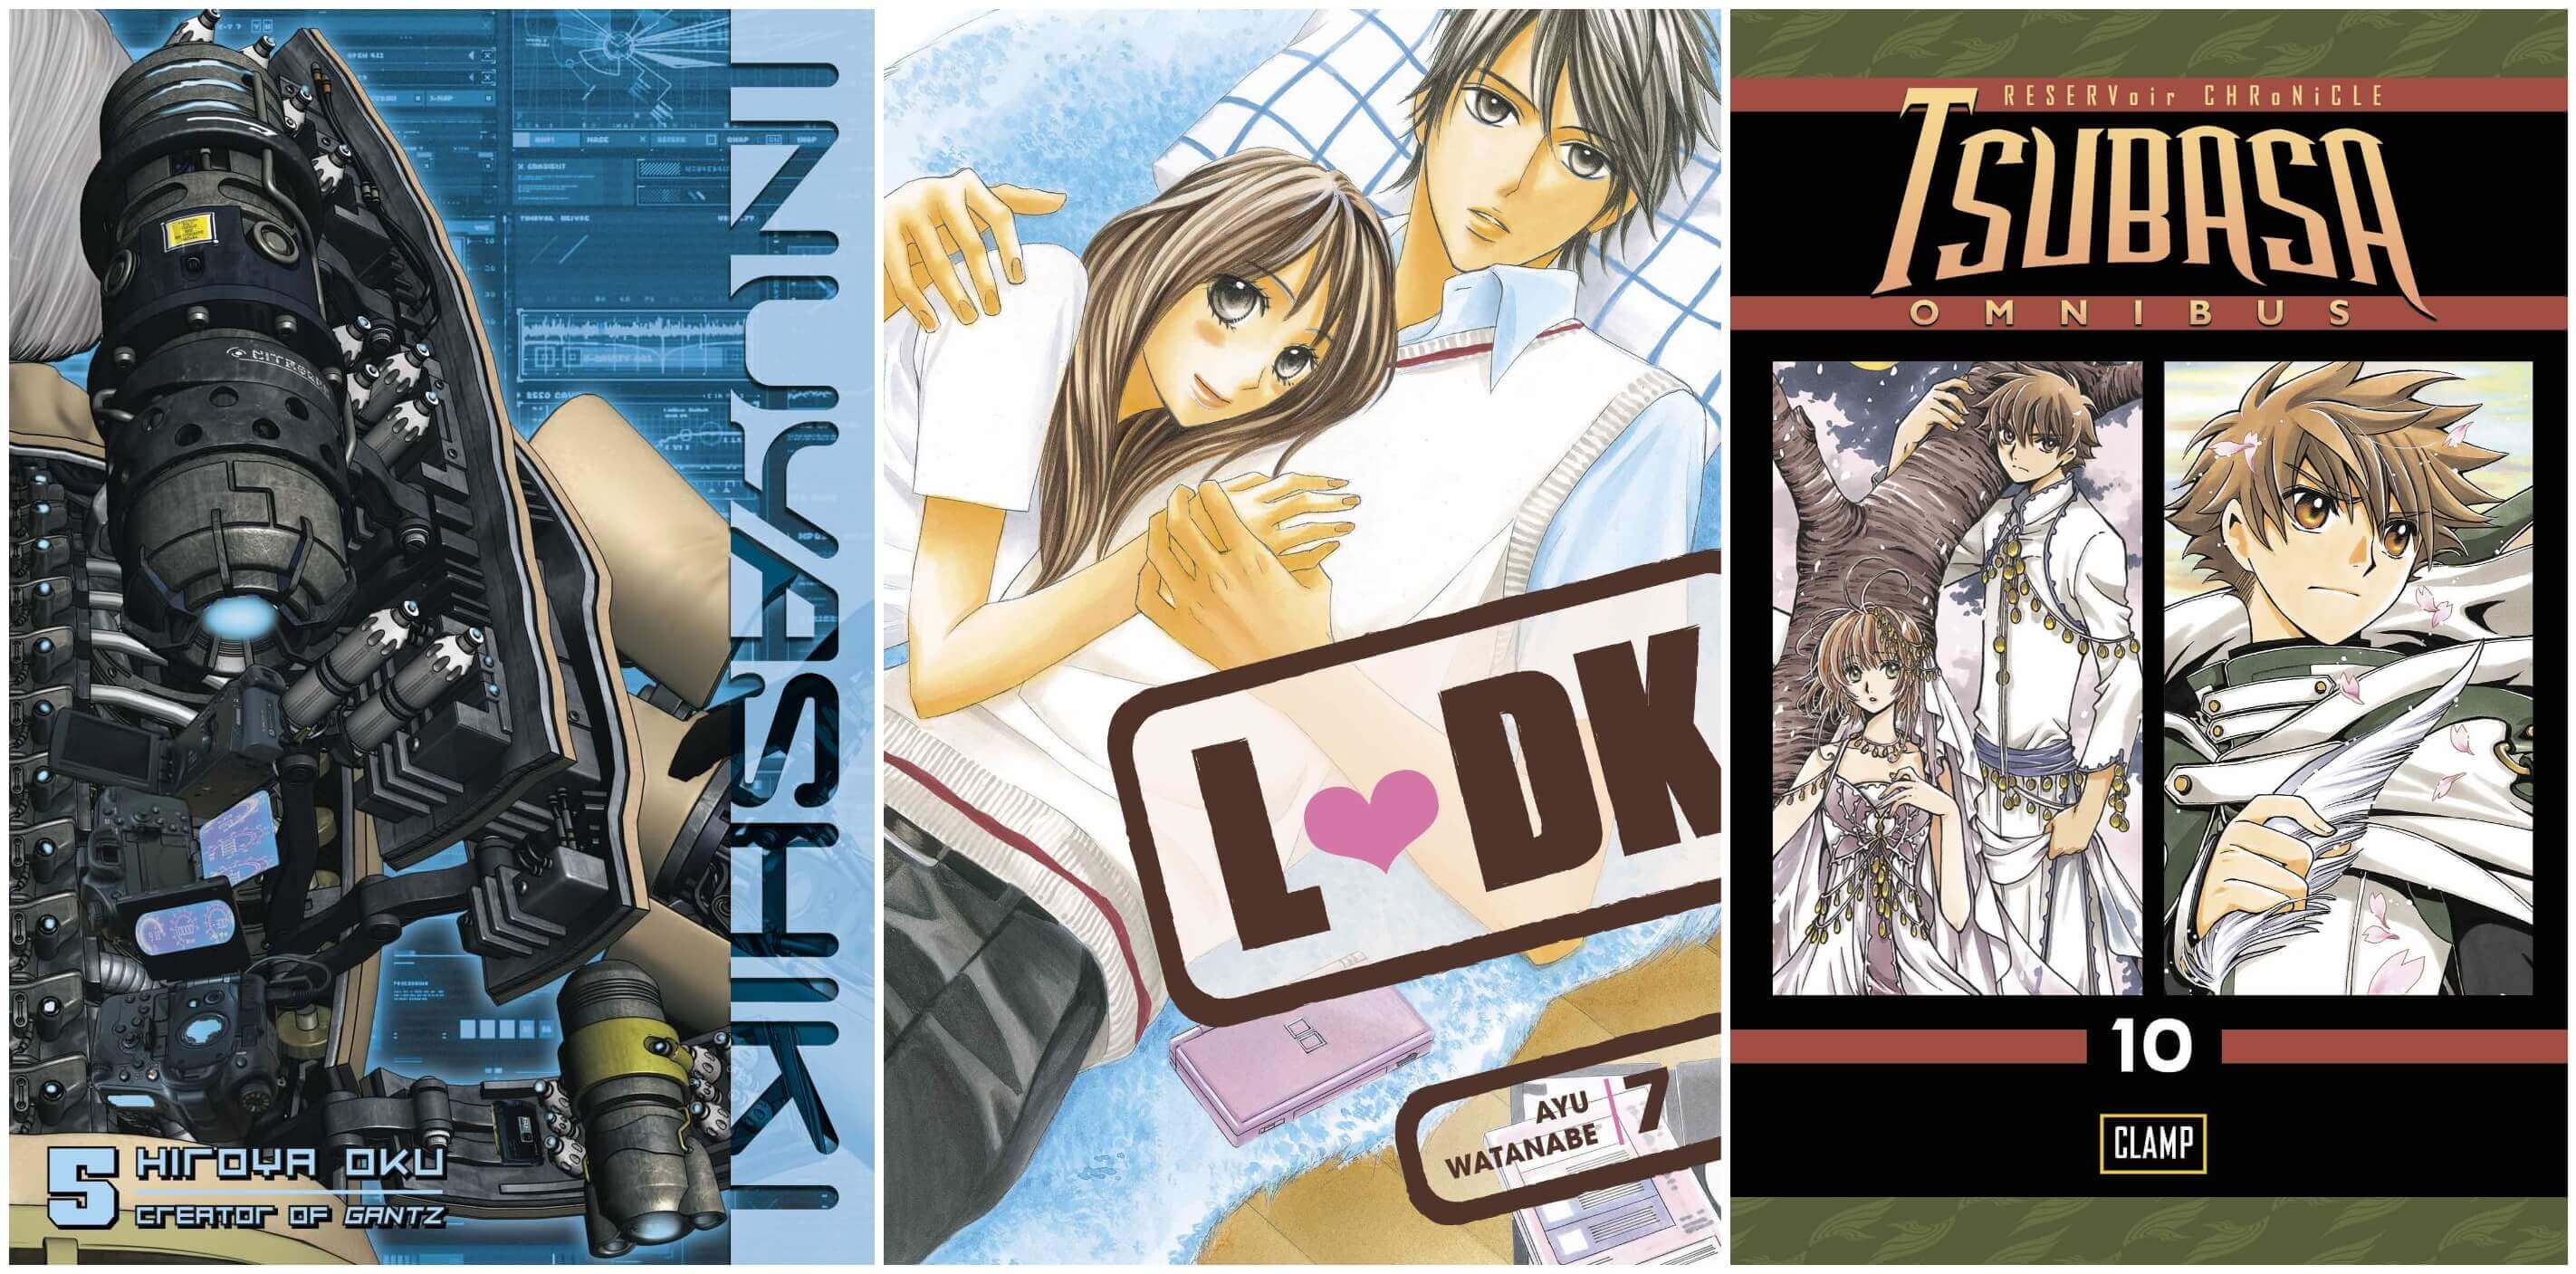 October 2016 Manga Releases Covers for Inuyashiki, LDK, and Tsubasa.